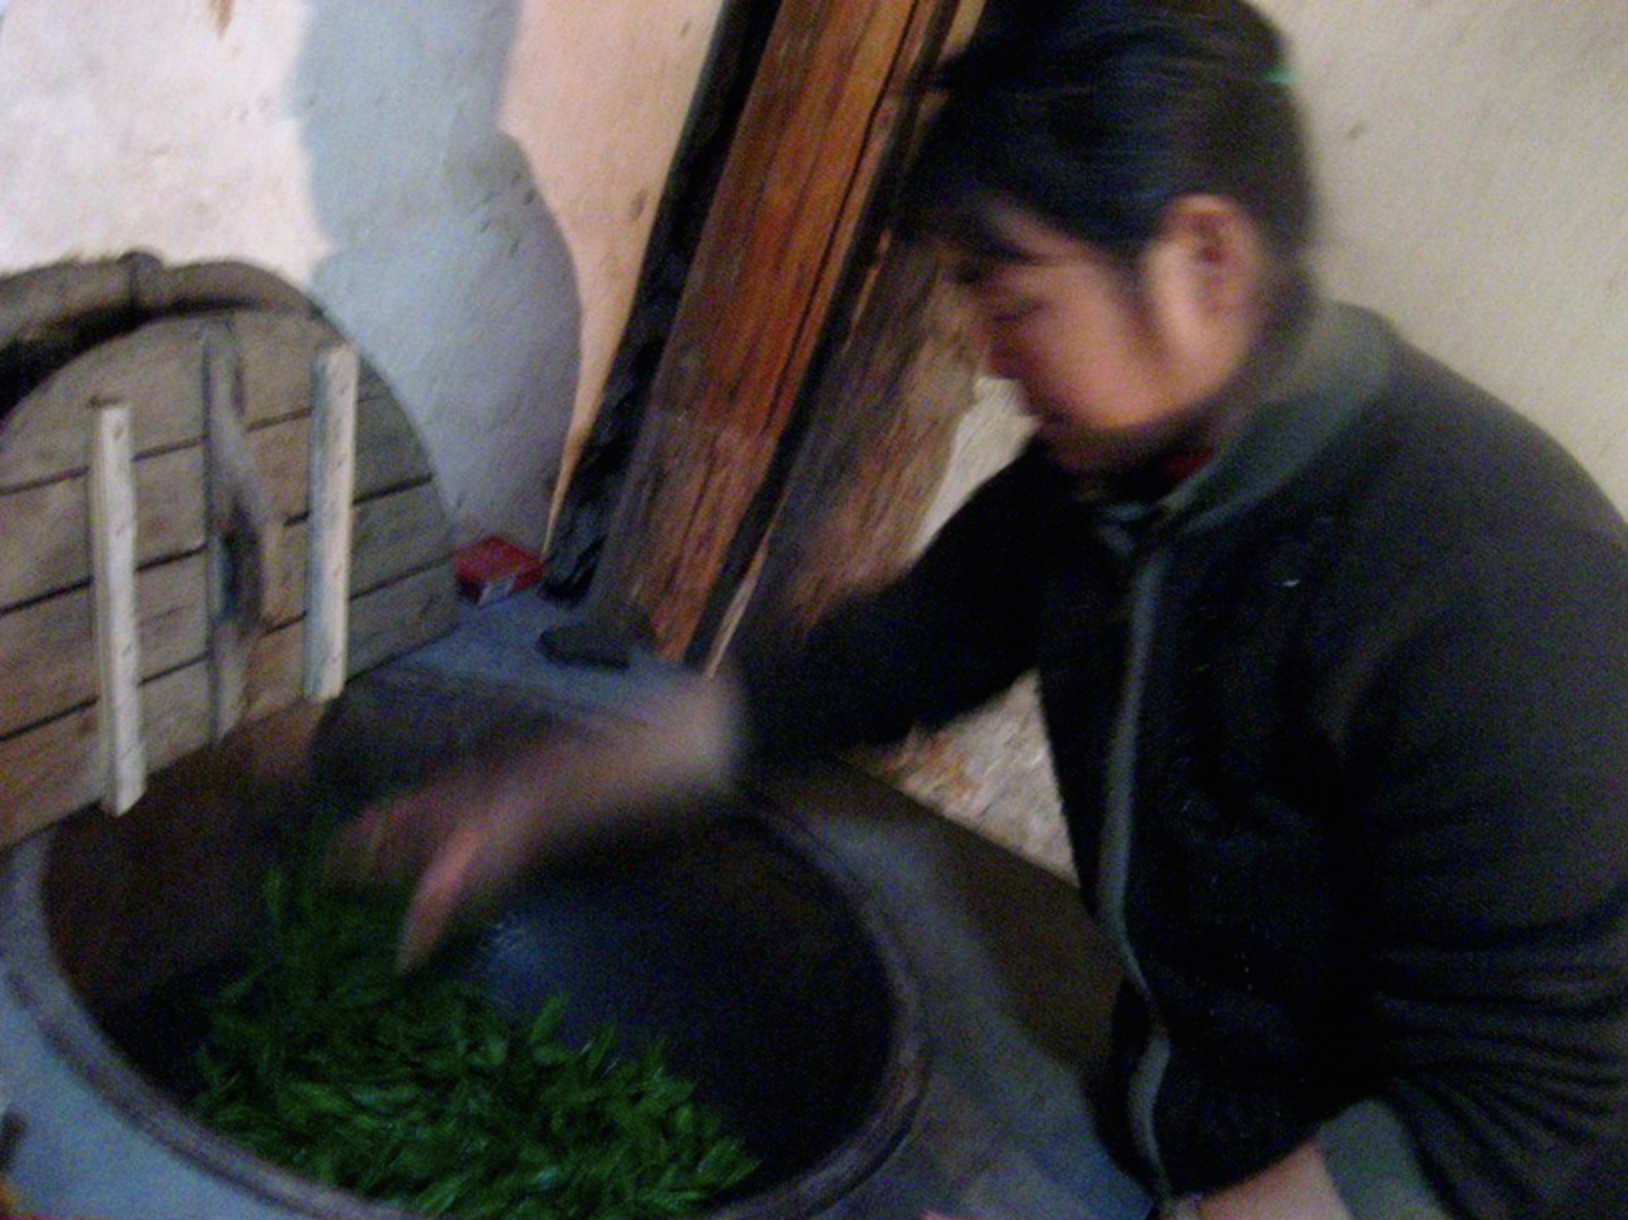 hand firing green tea in China